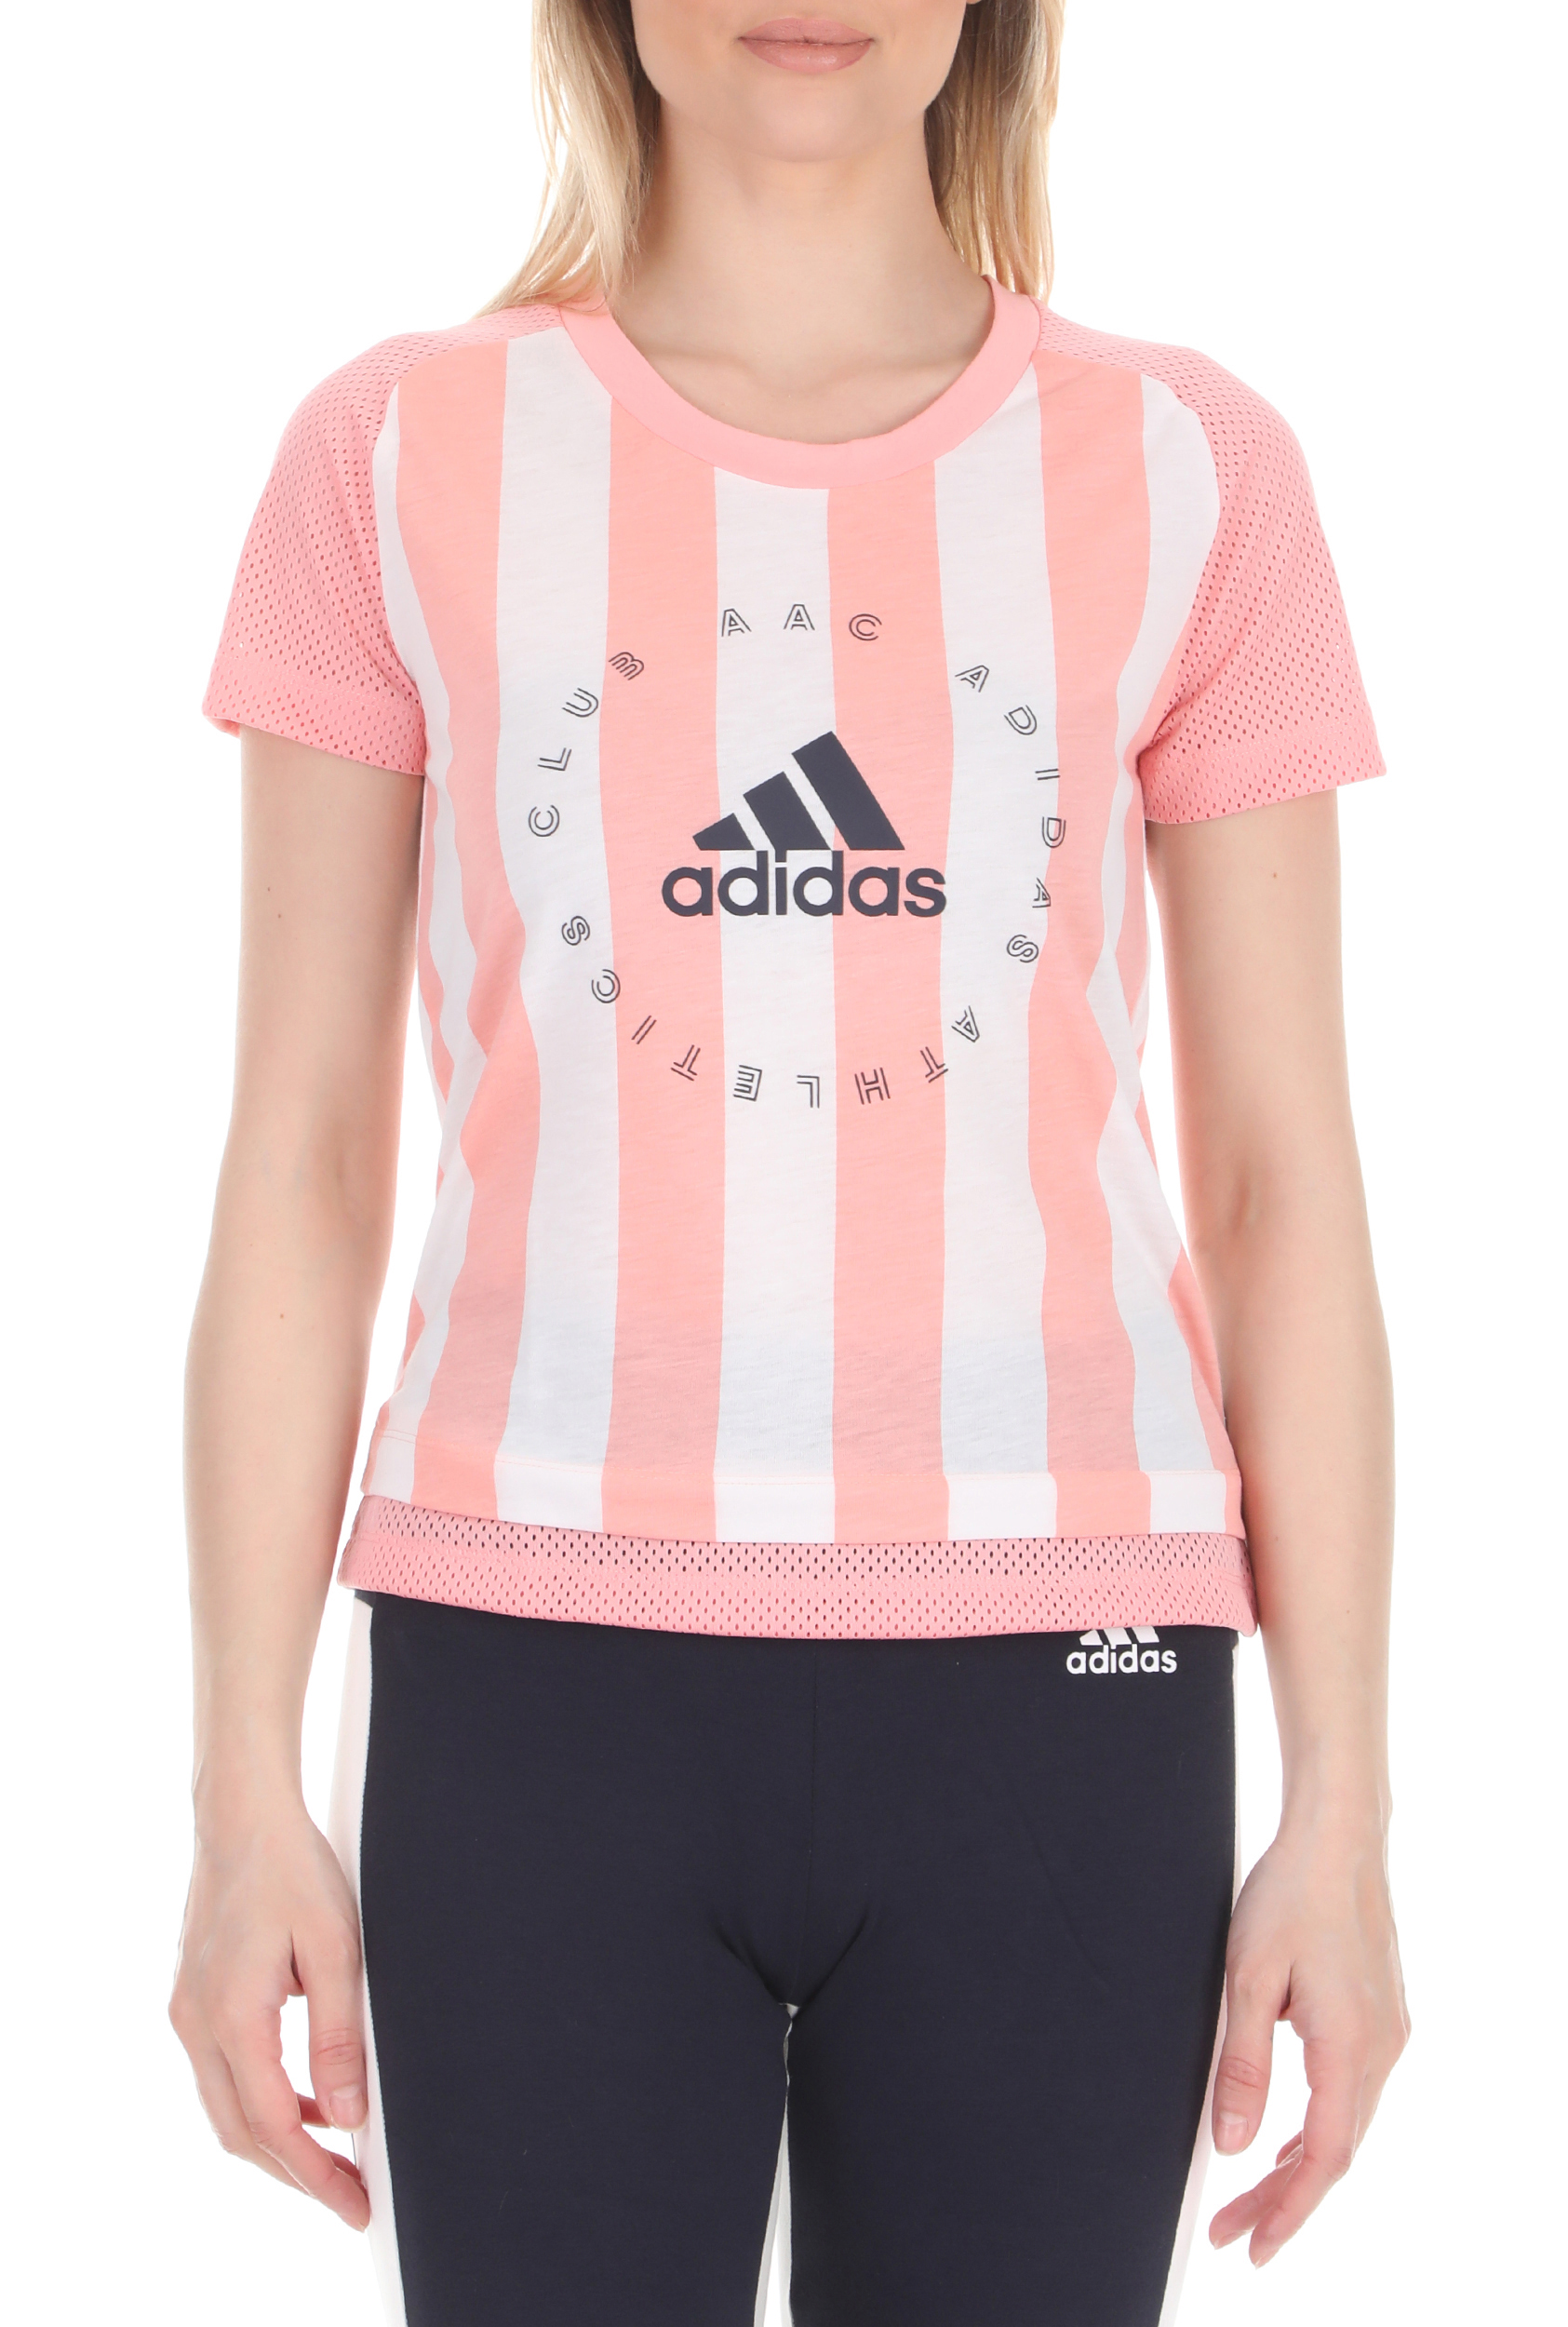 adidas Performance – Γυναικείο t-shirt adidas Performance W AAC Tee ροζ λευκή